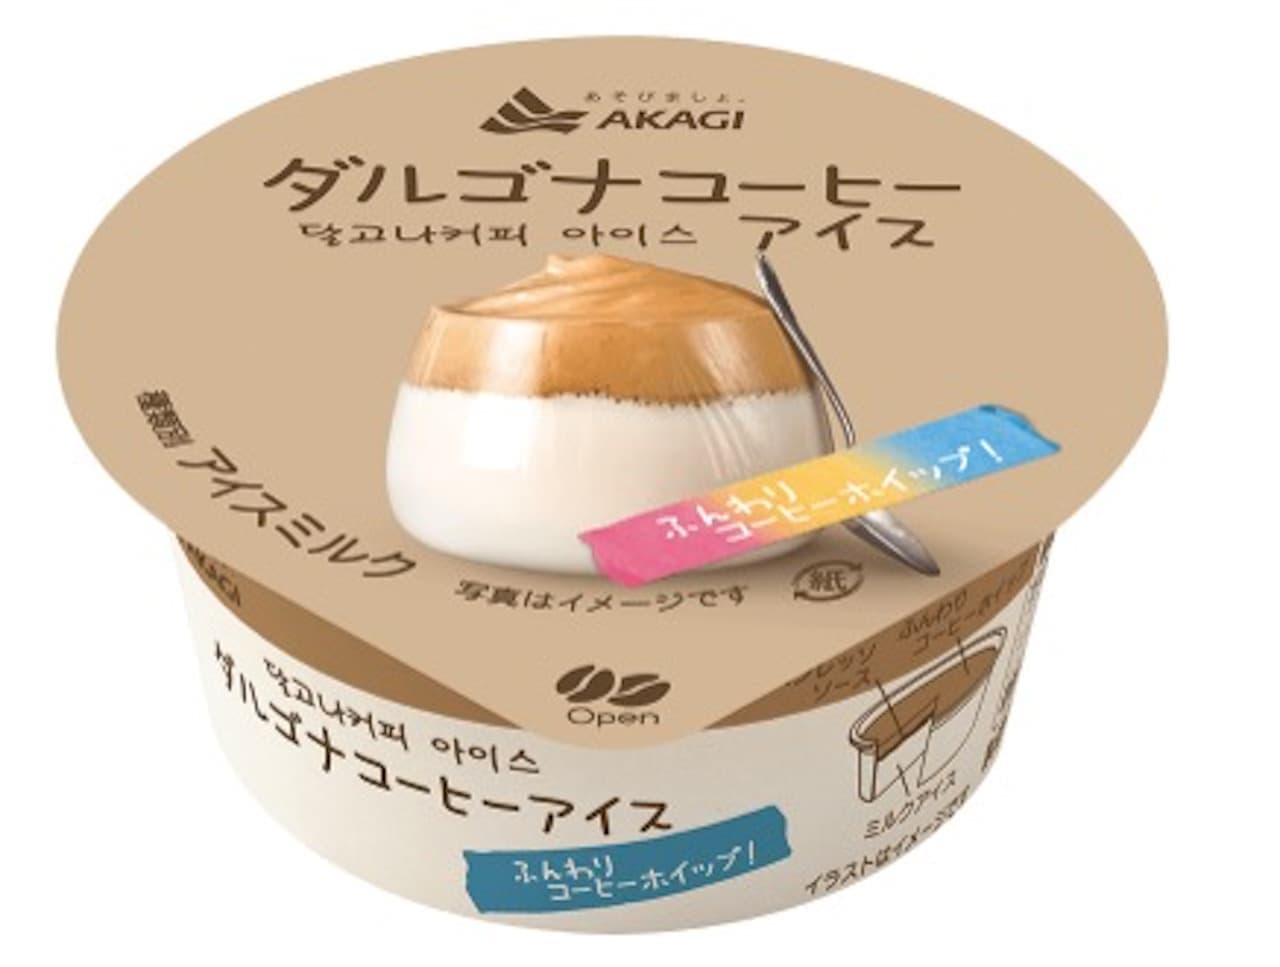 "Dalgona Coffee Ice (Cup)" from Akagi Nyugyo